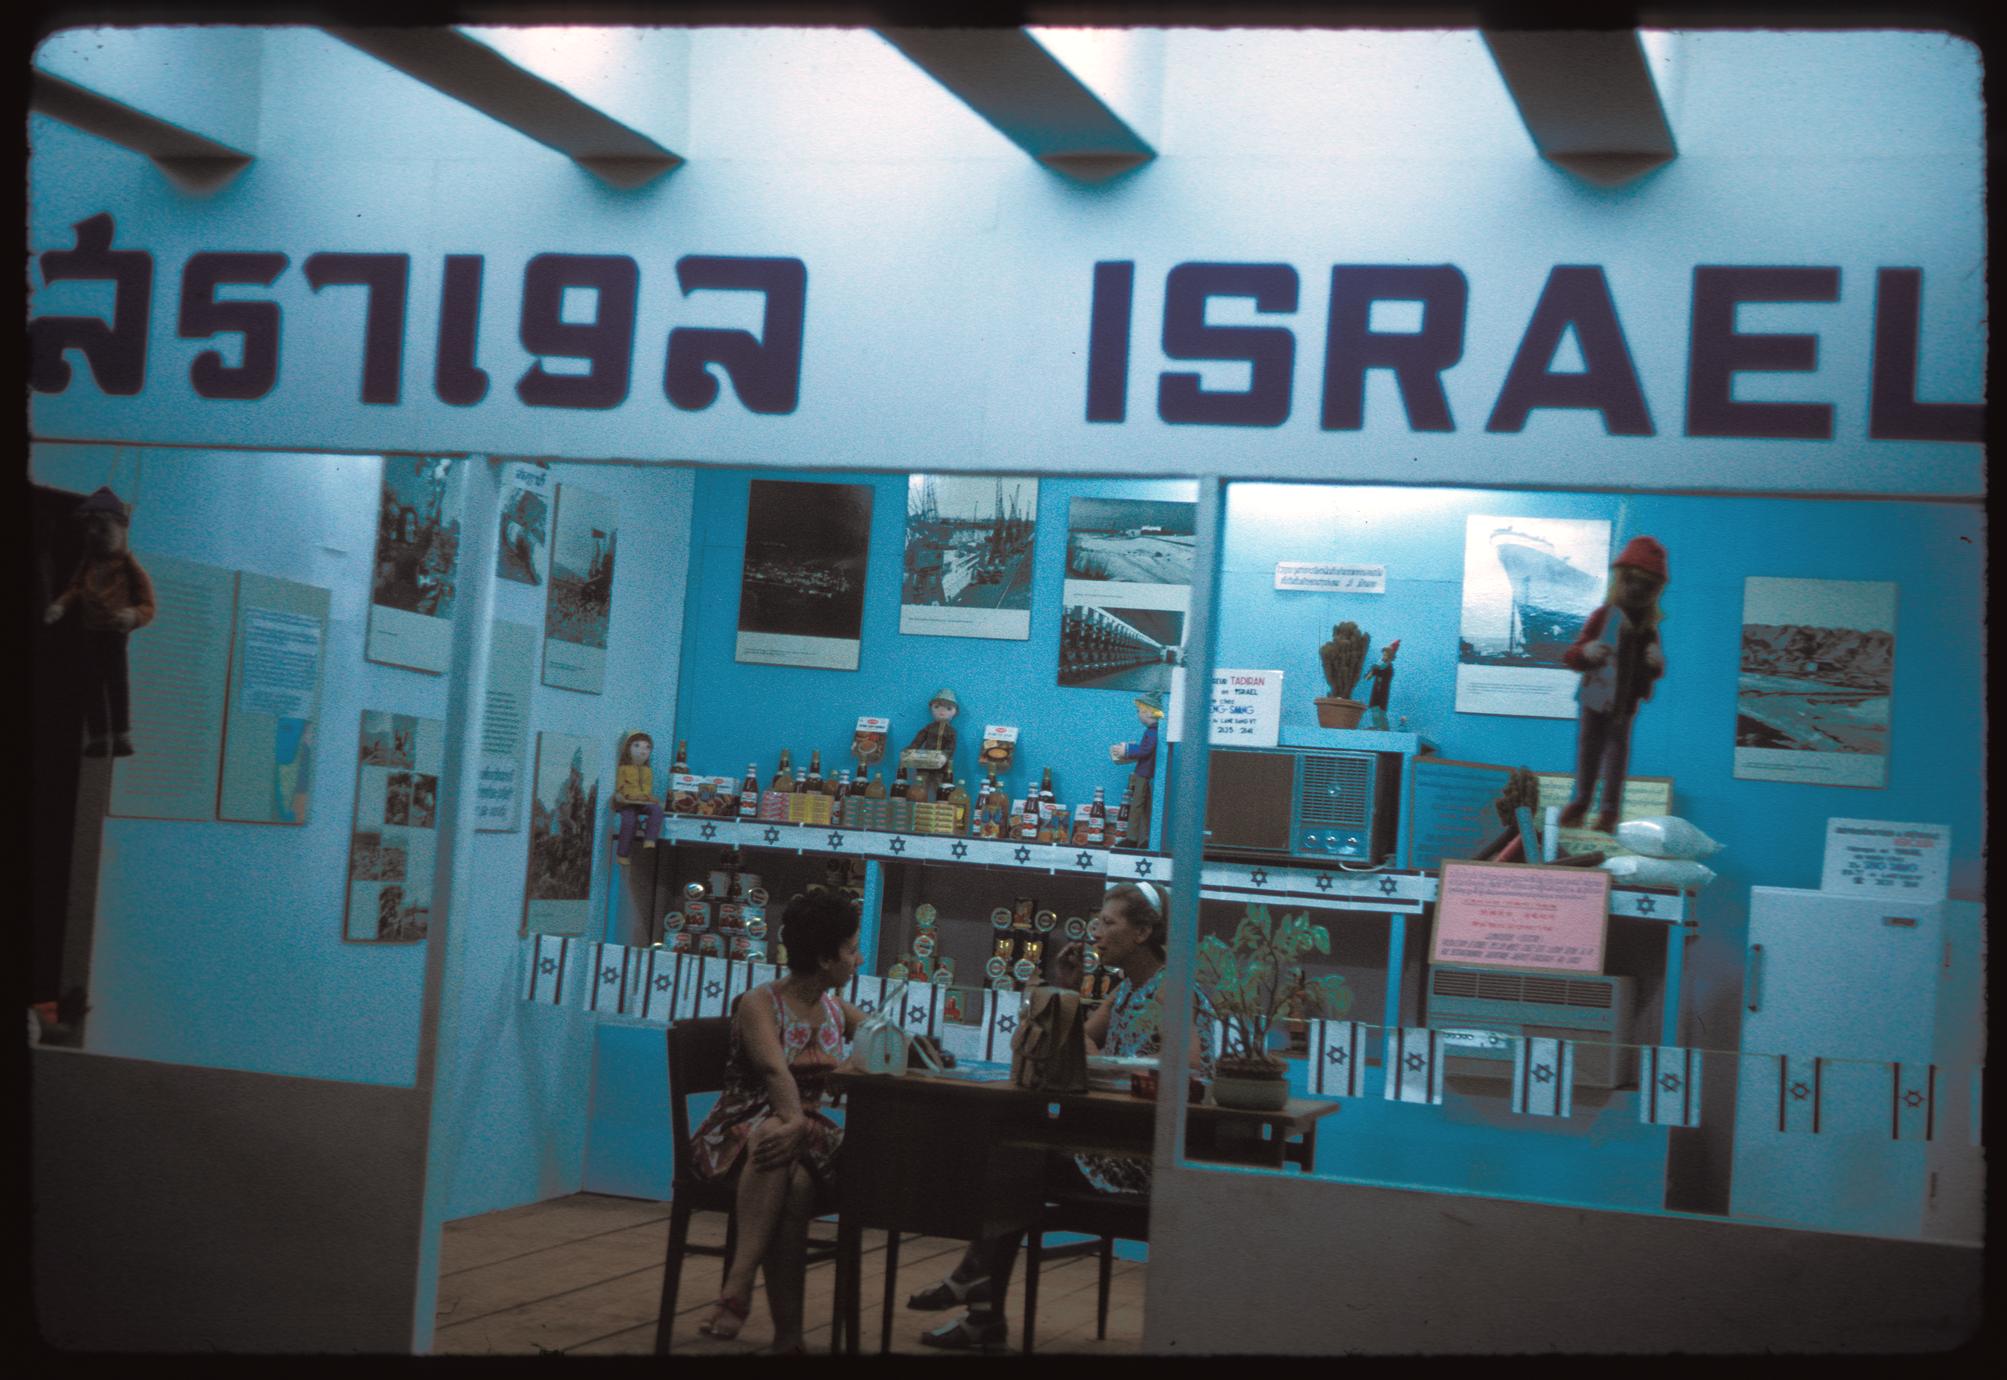 That Luang fair : Israeli exhibit